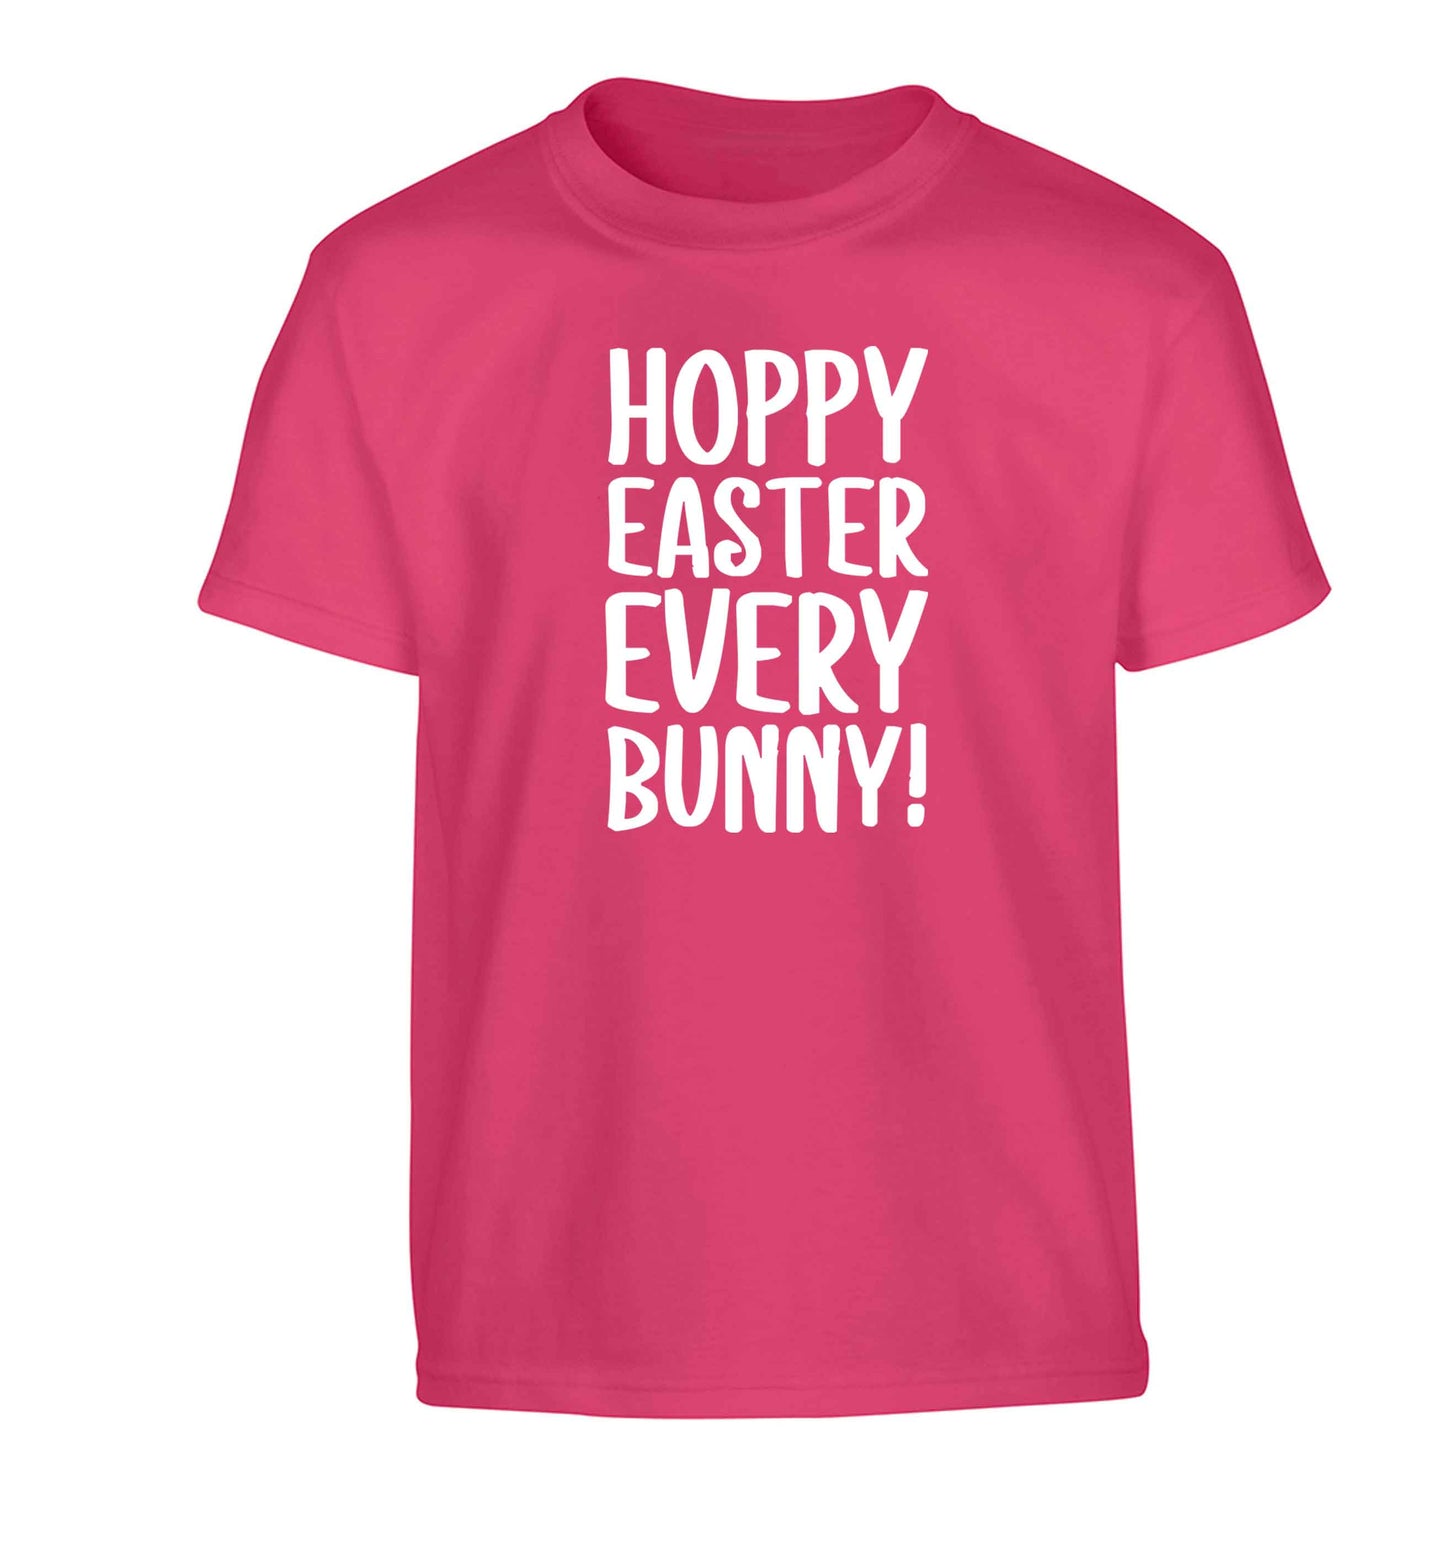 Hoppy Easter every bunny! Children's pink Tshirt 12-13 Years